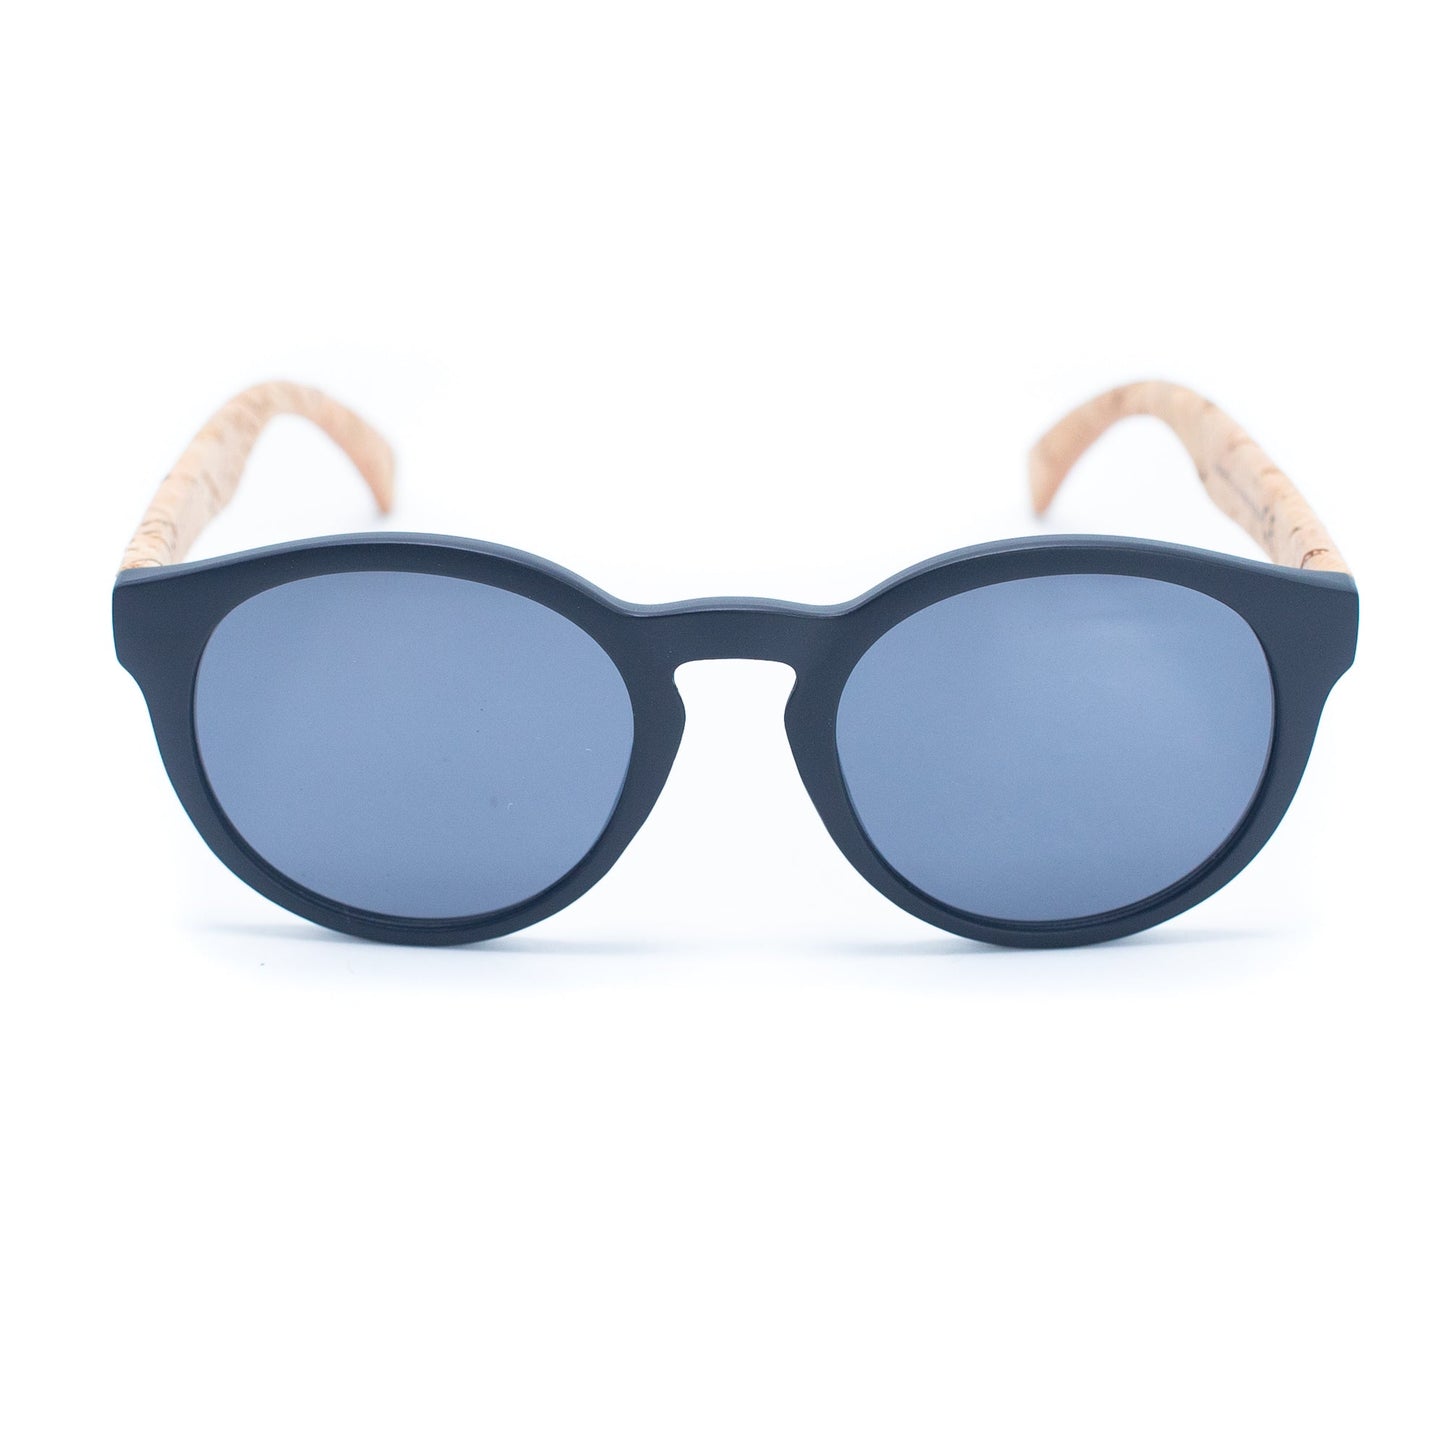 Vegan Cork Sunglasses for Women - Eyewear w/ UV Protection (Including case) L-859